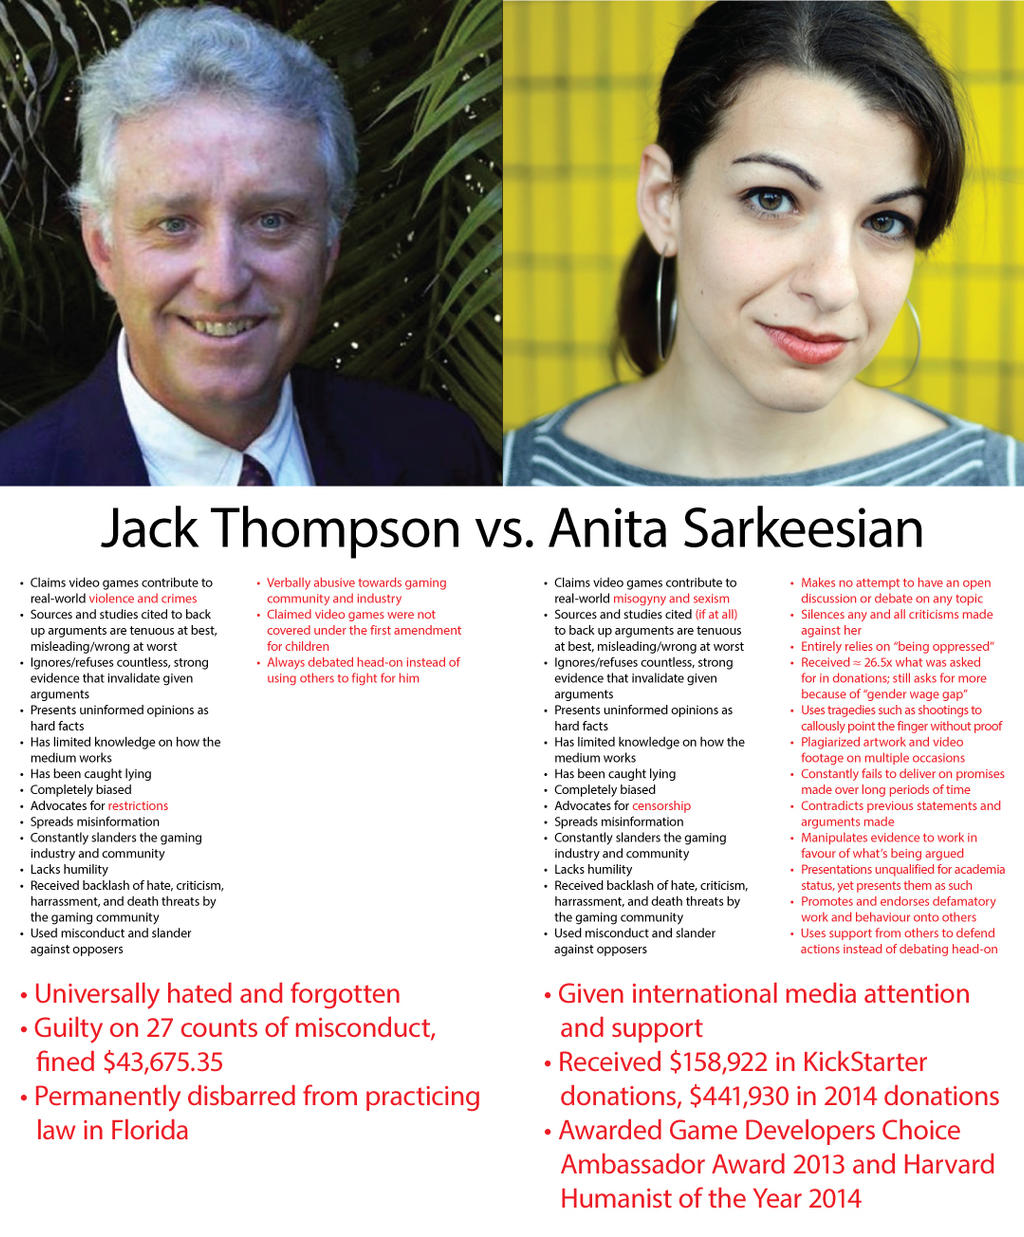 Jack Thompson vs. Anita Sarkeesian